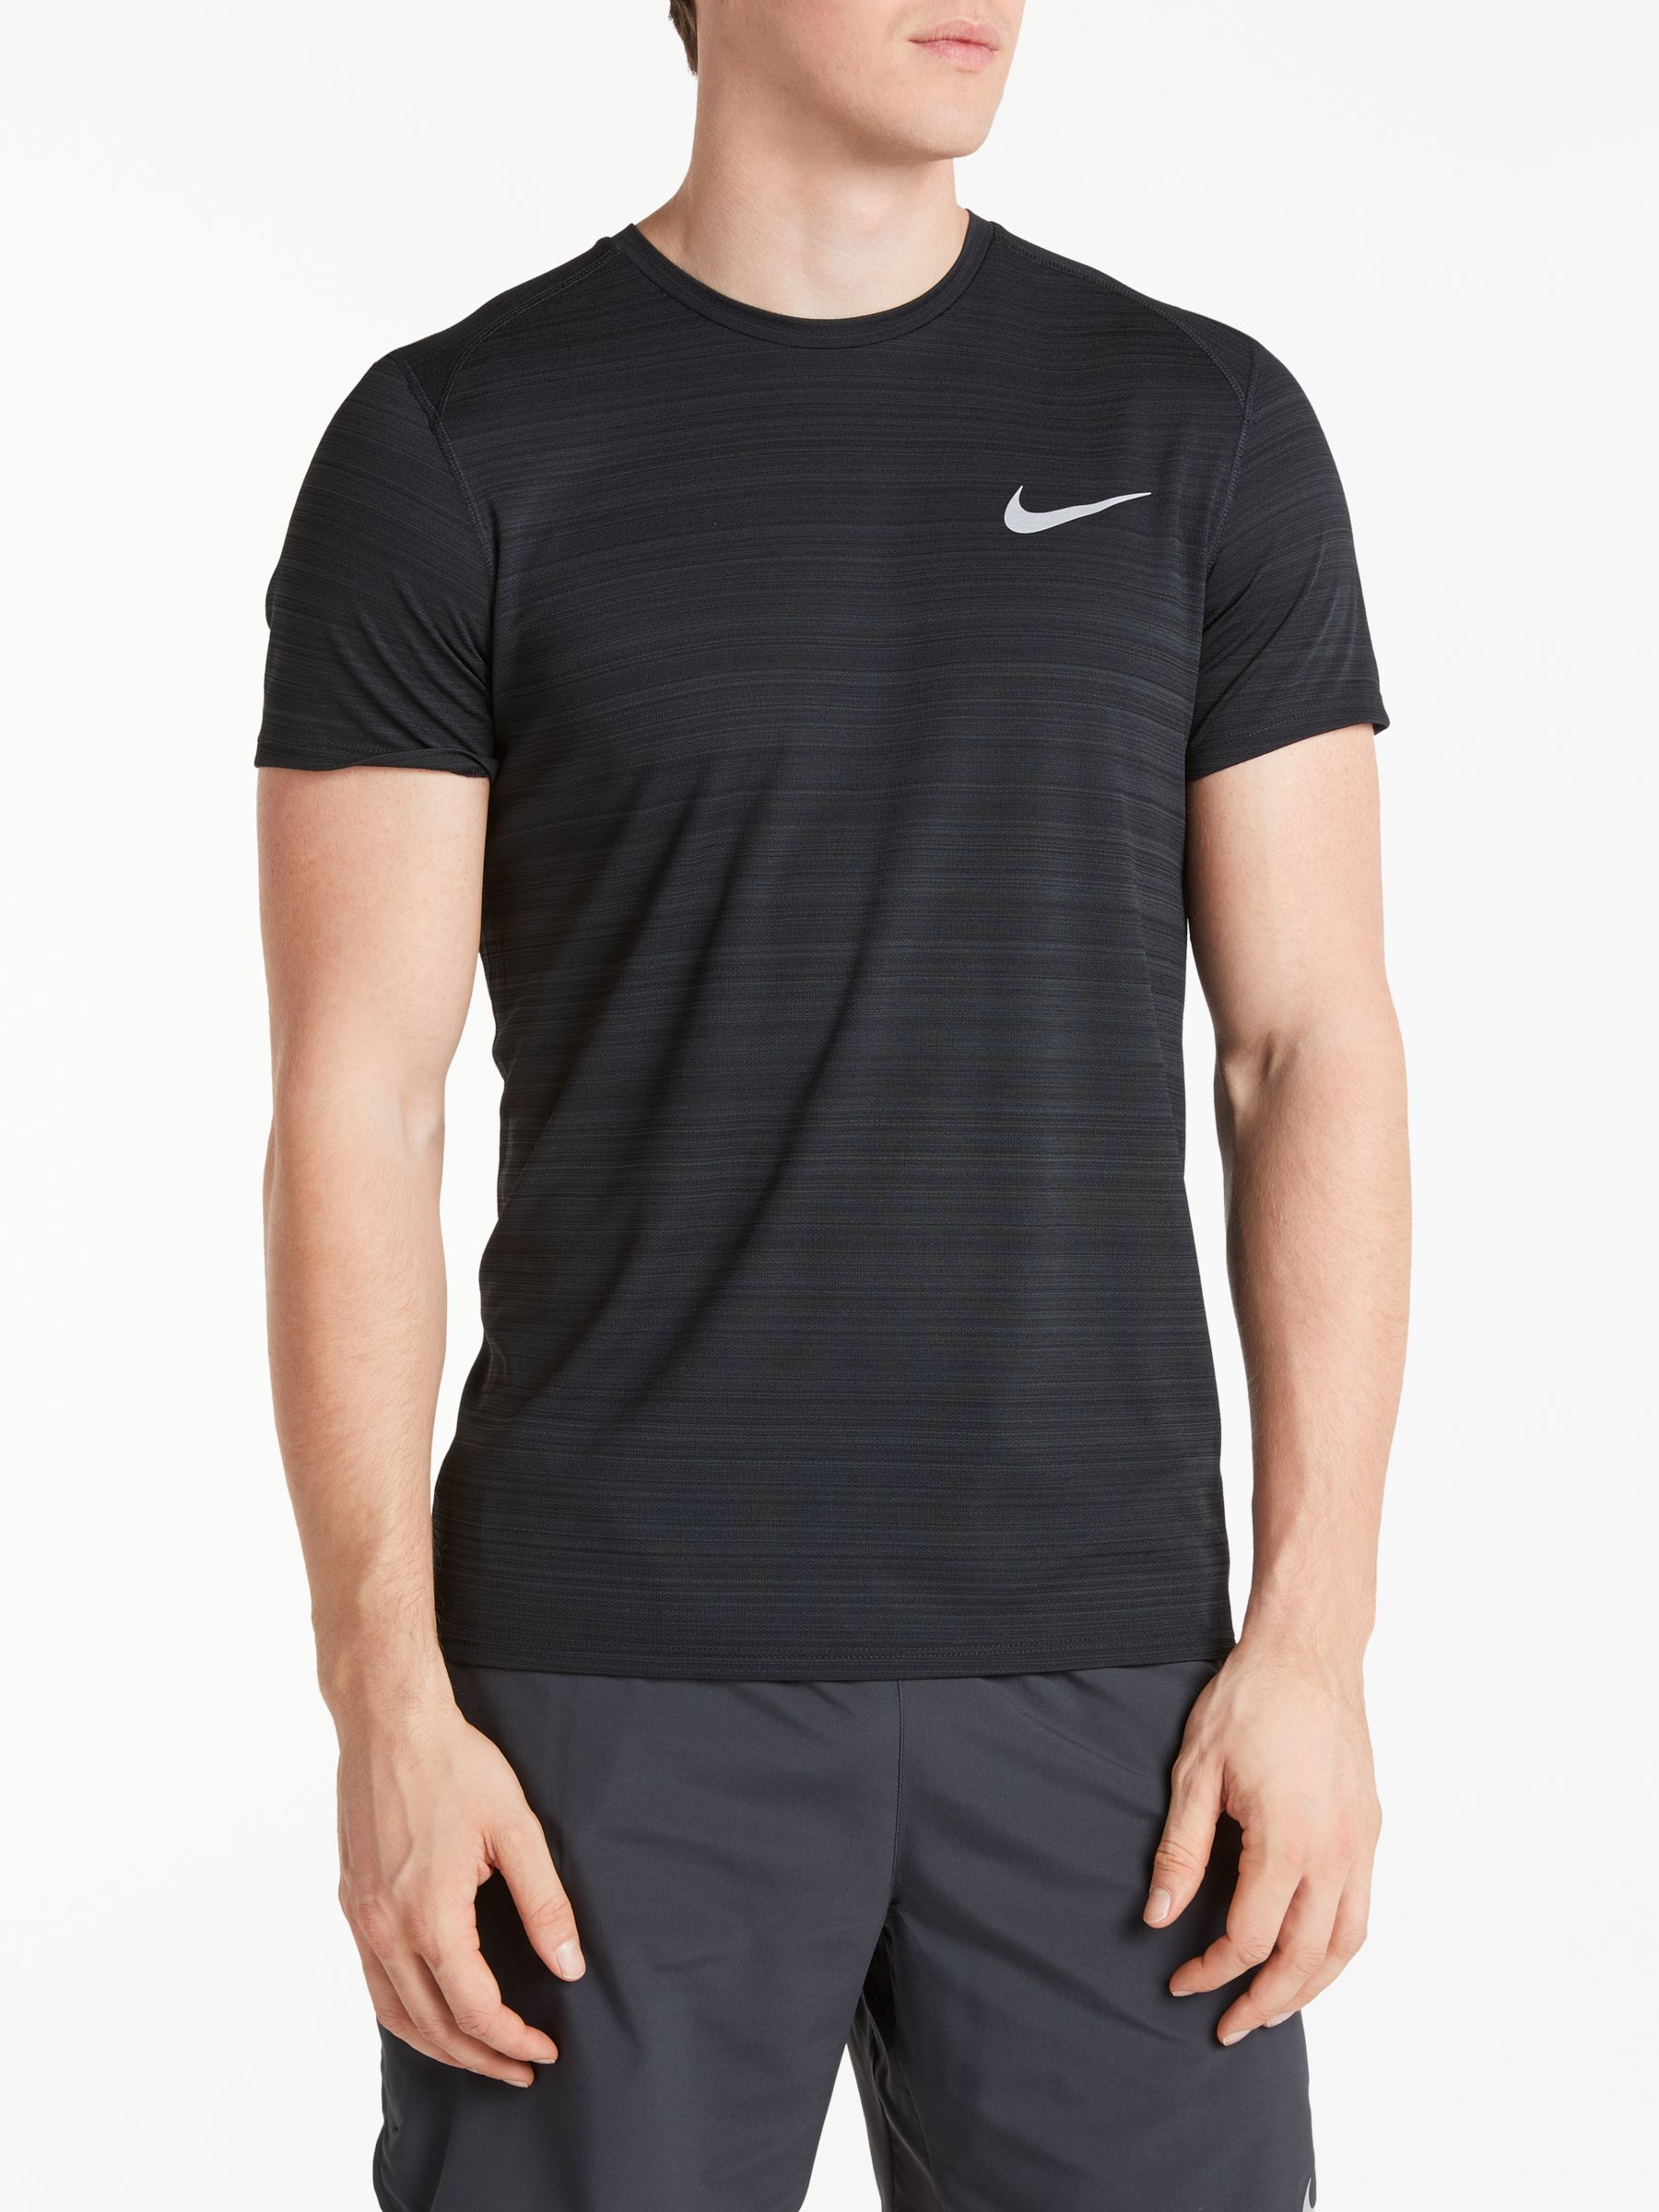 Nike Dry Miler Running Short Sleeve Top